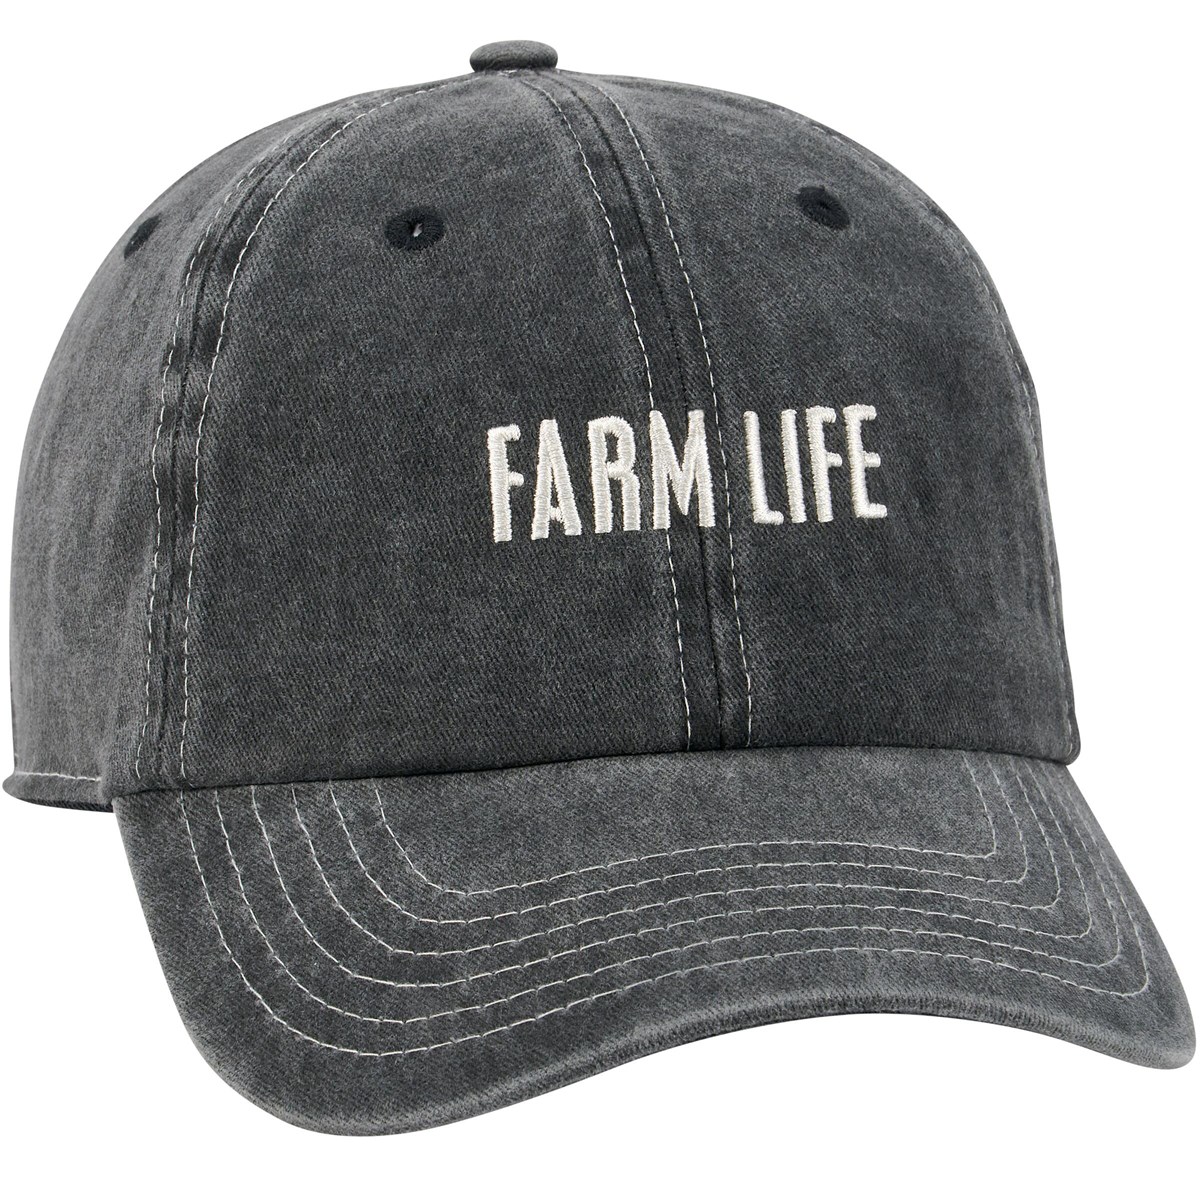 Farm Life Baseball Cap - Cotton, Metal